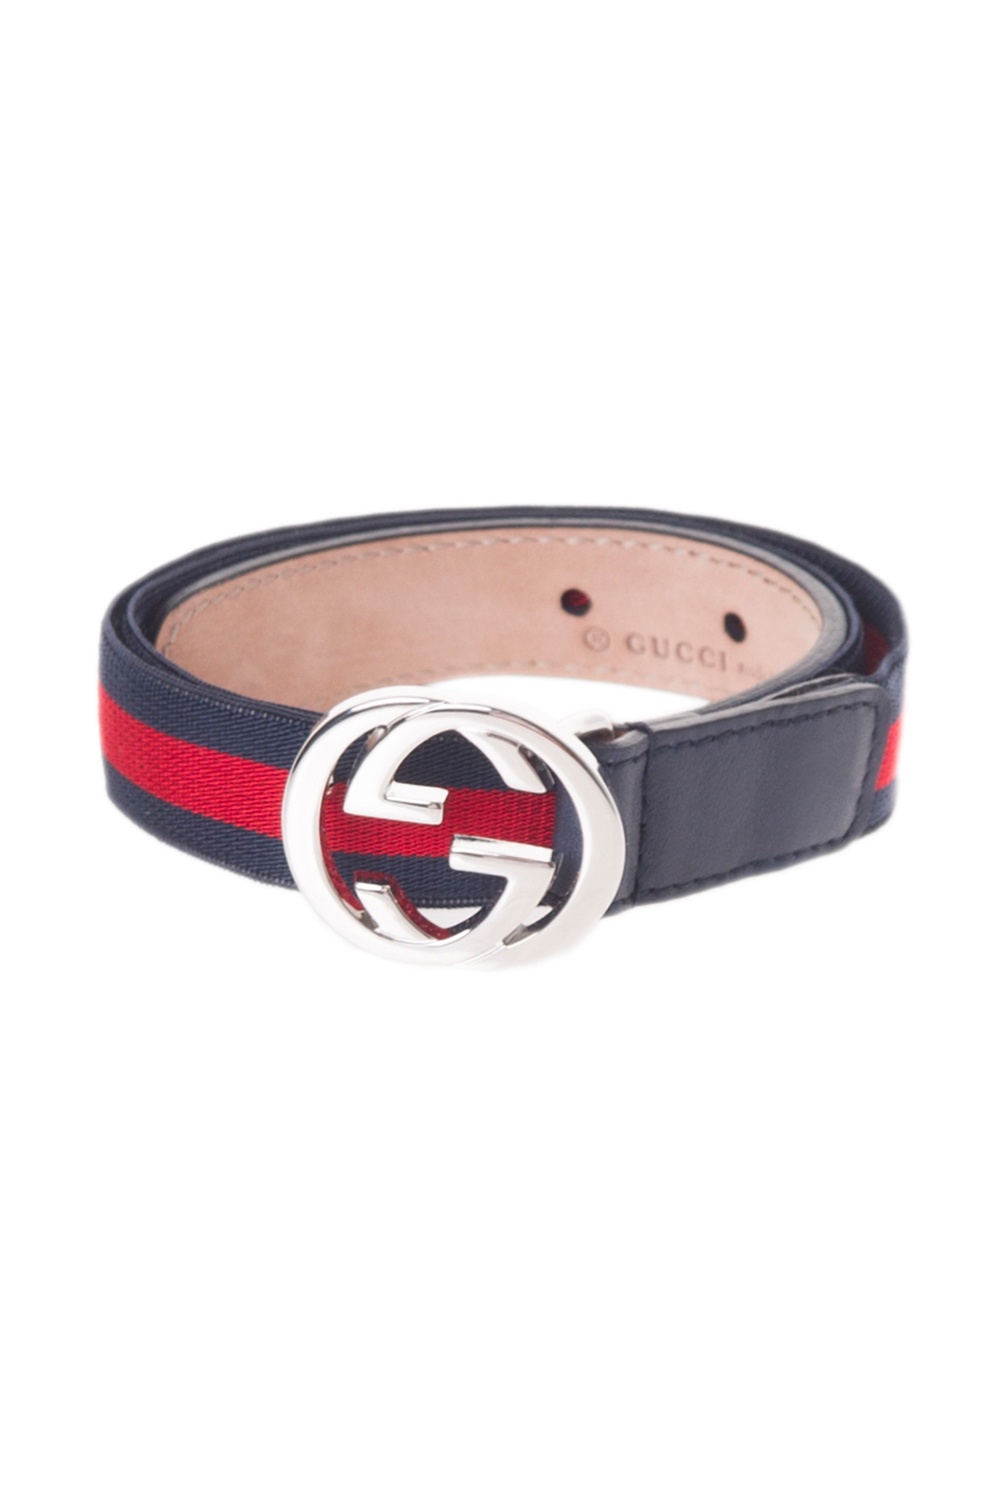 Gucci Kids Logo buckle belt, Kids's Kids accessories